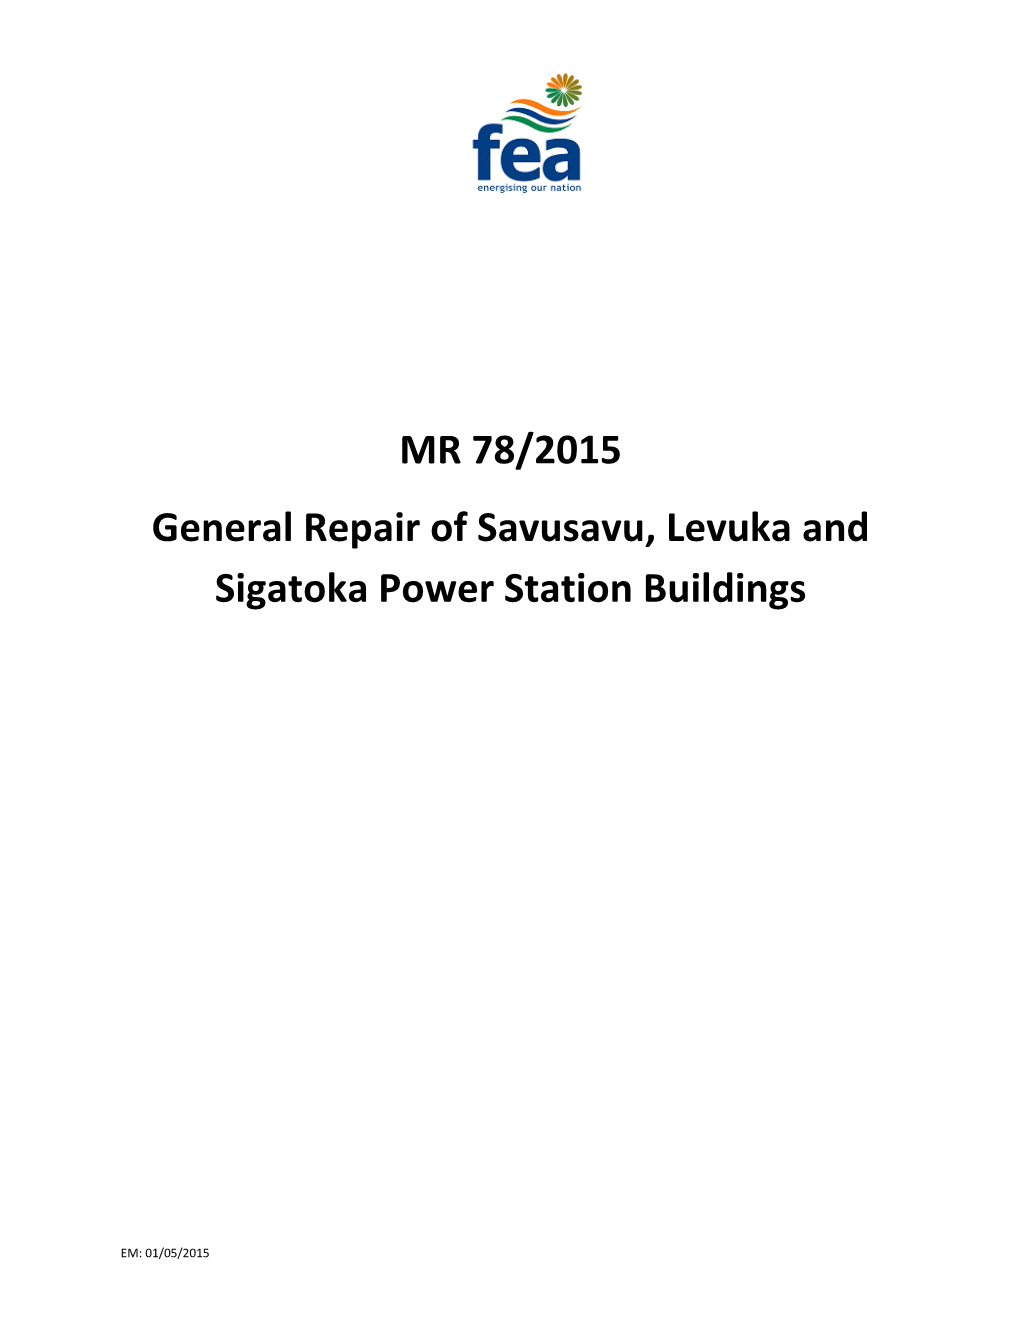 MR 78/2015 General Repair of Savusavu, Levuka and Sigatoka Power Station Buildings